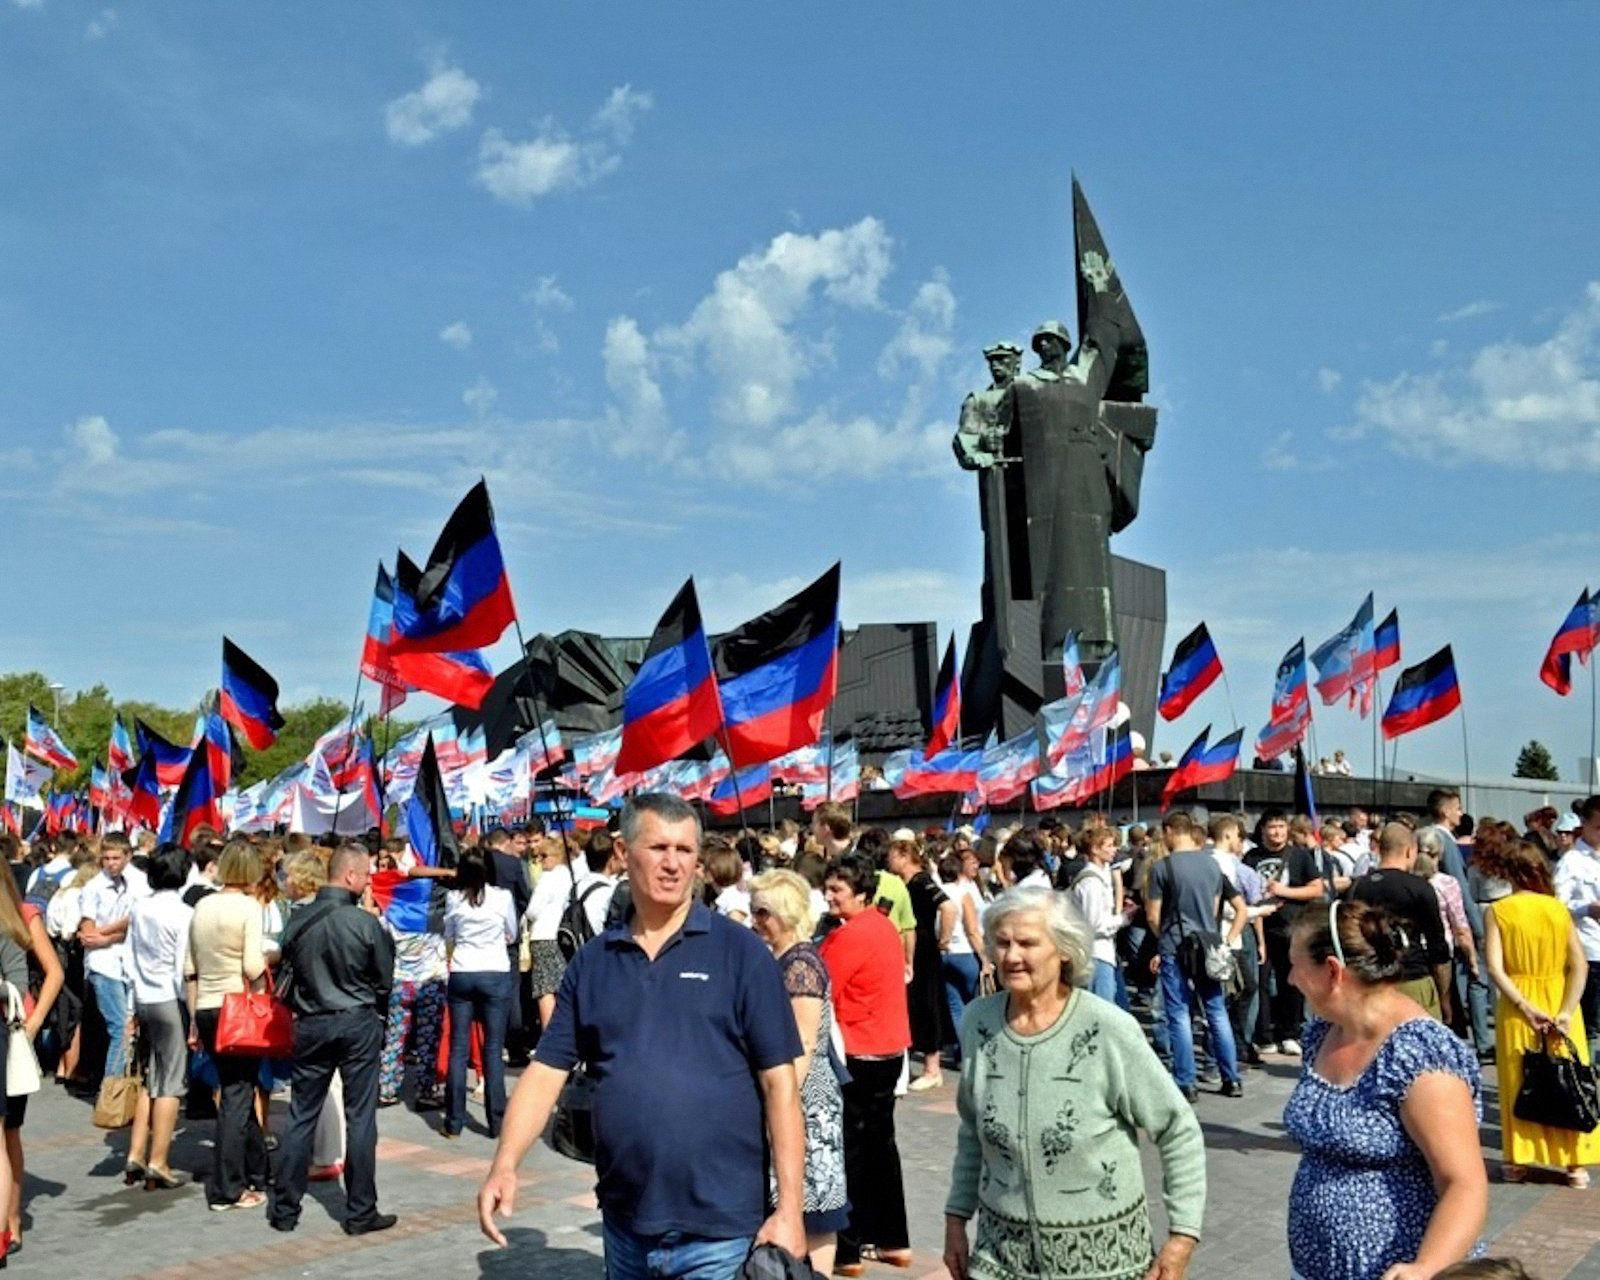 Peeeople in Donetsk